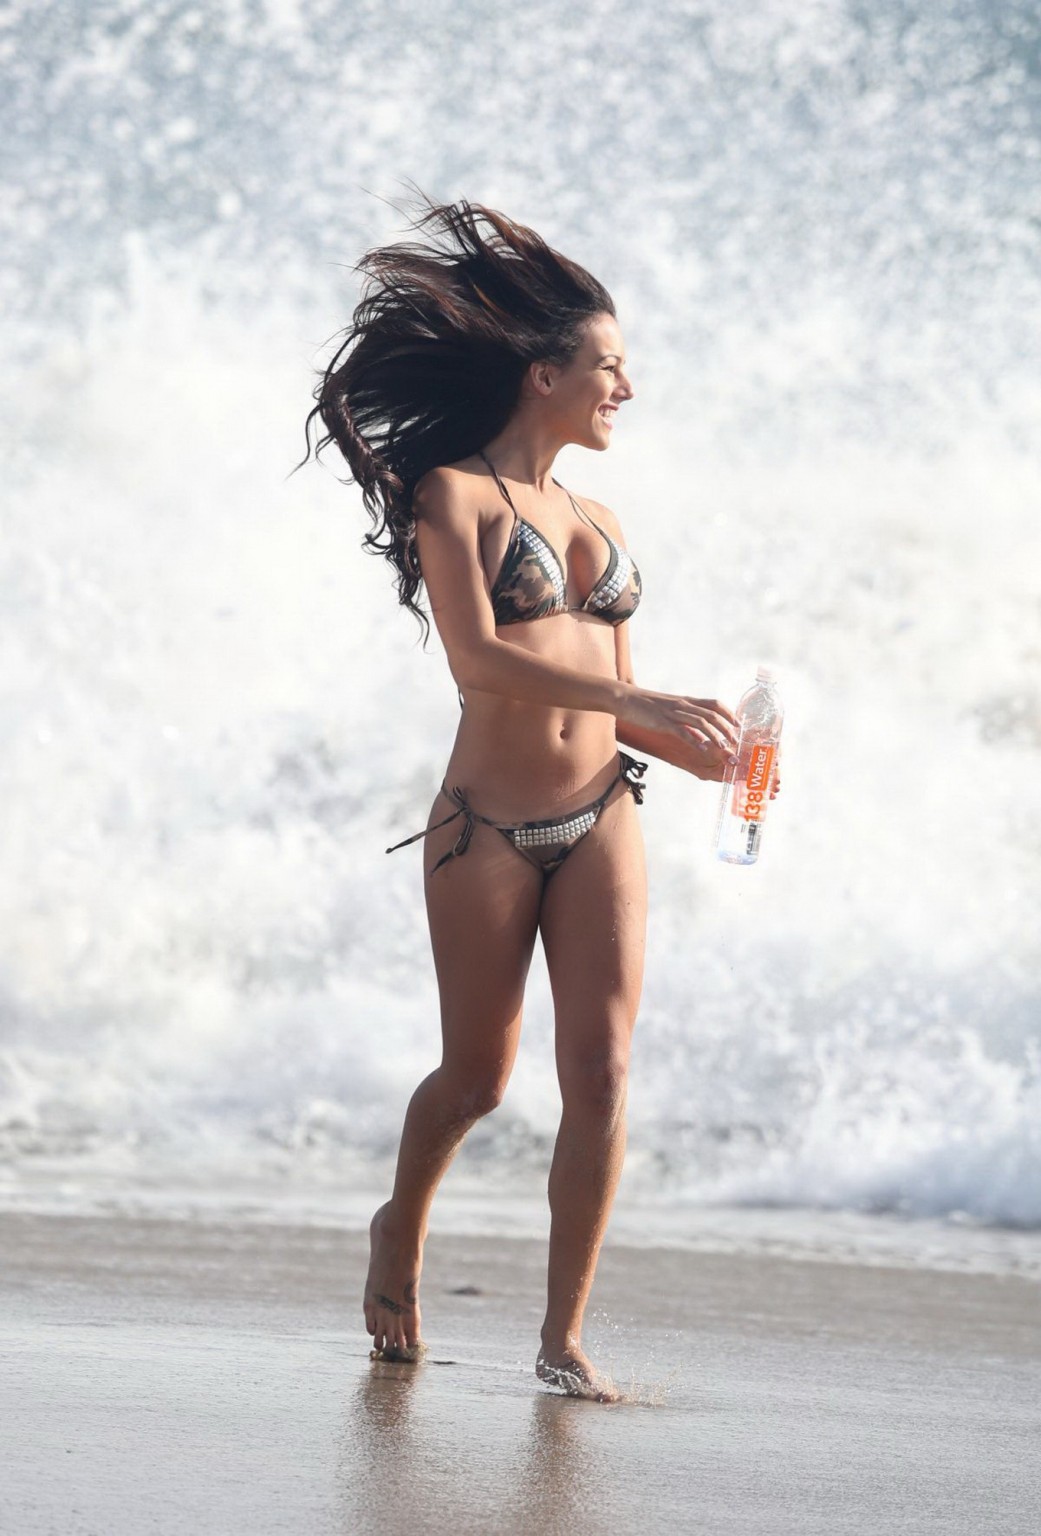 Katelynn ansari mostrando su cuerpo caliente bikini para 138 agua photoshoot en cali
 #75202824